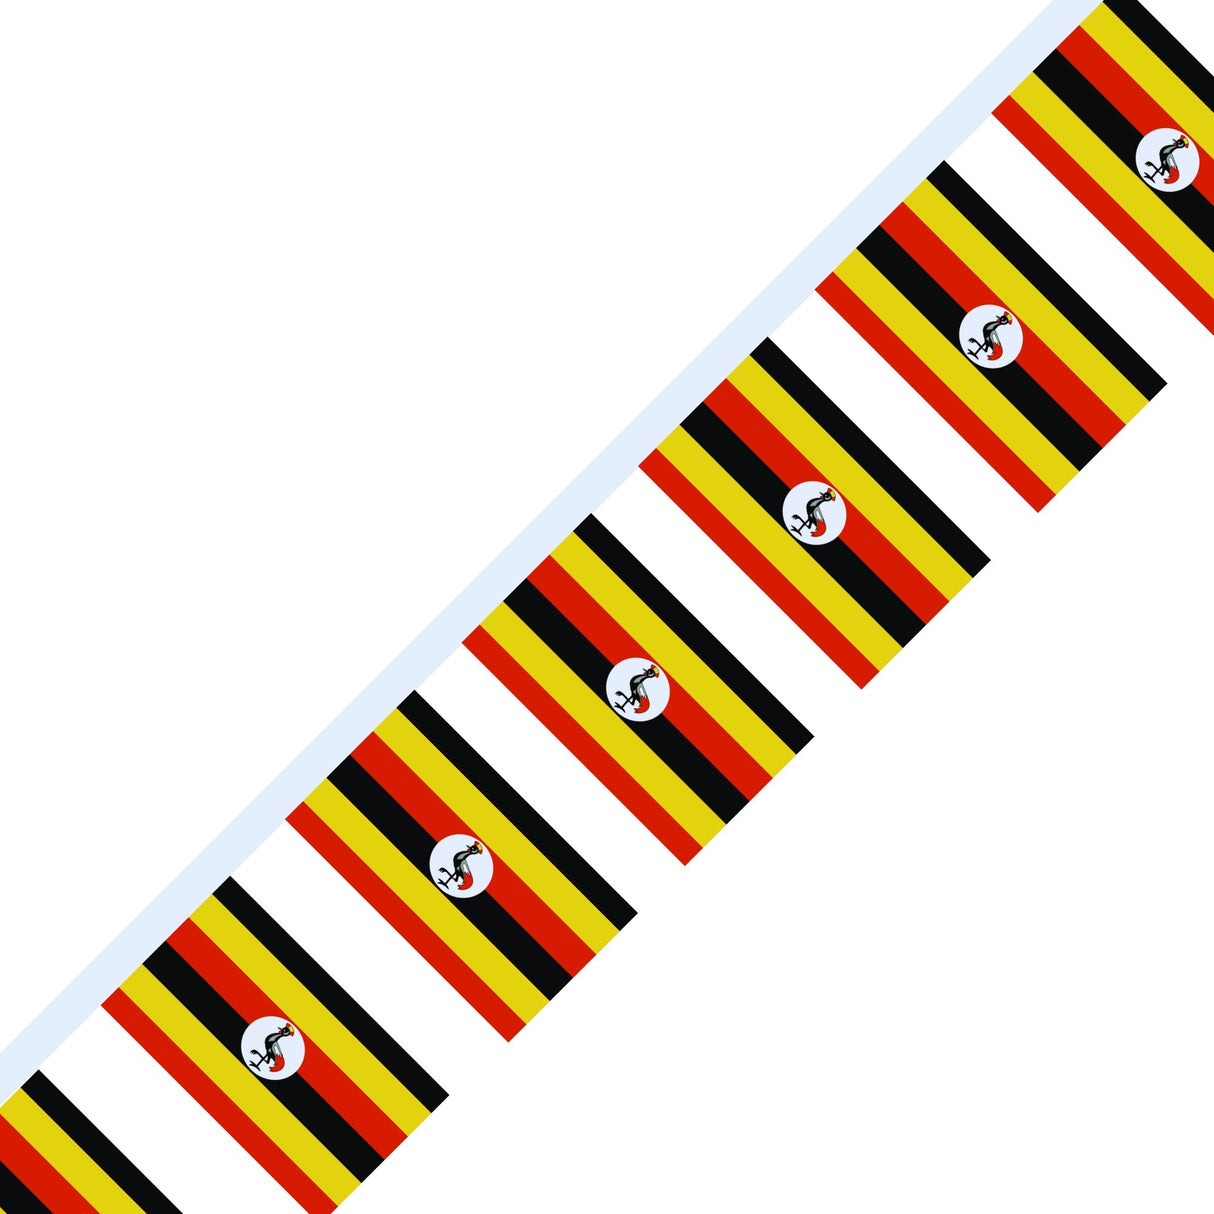 Uganda Flag Garland - Pixelforma